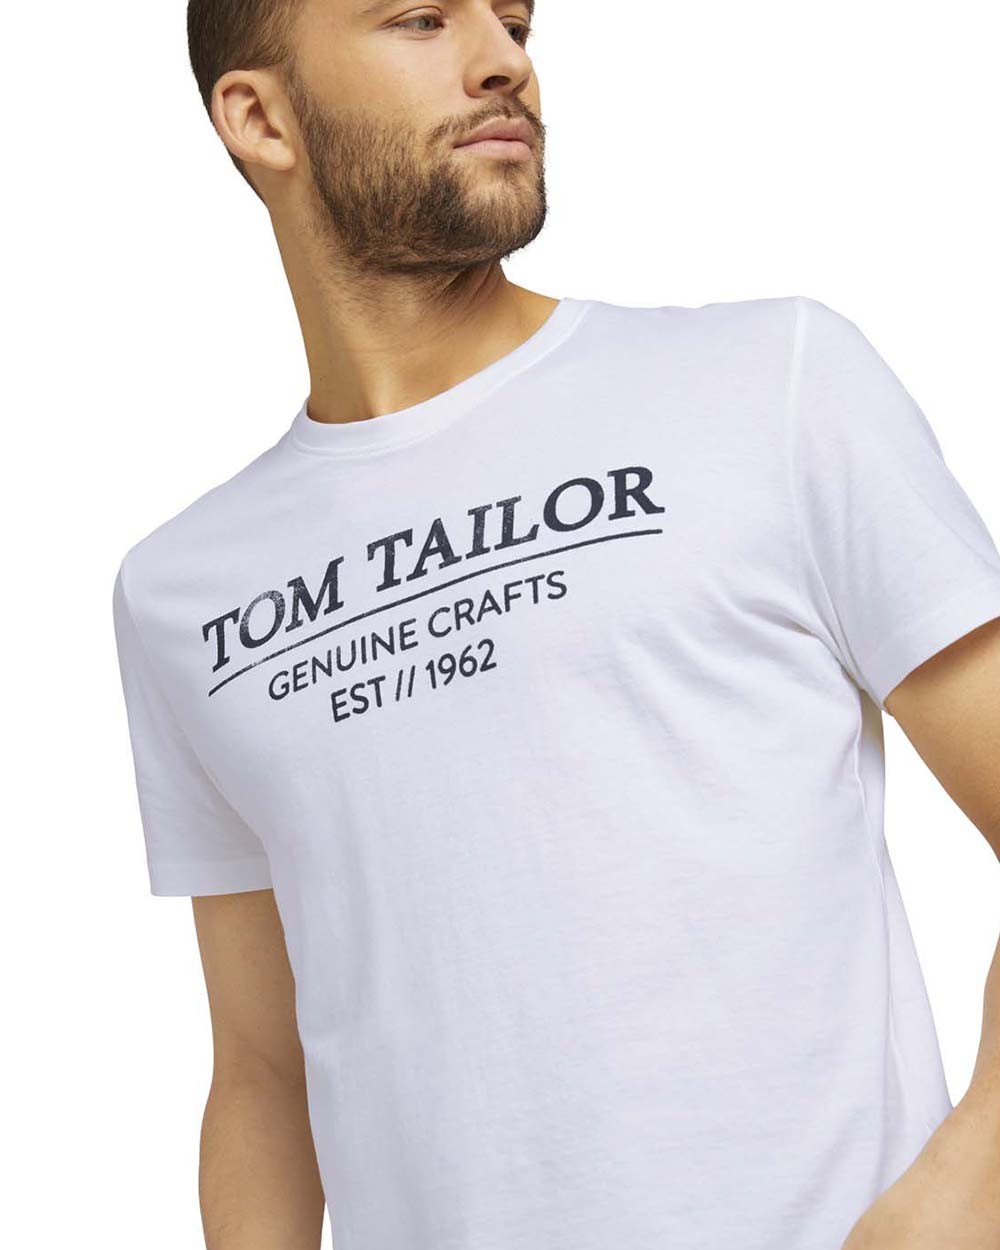 TAILOR 1021229 - - TOM T-shirt